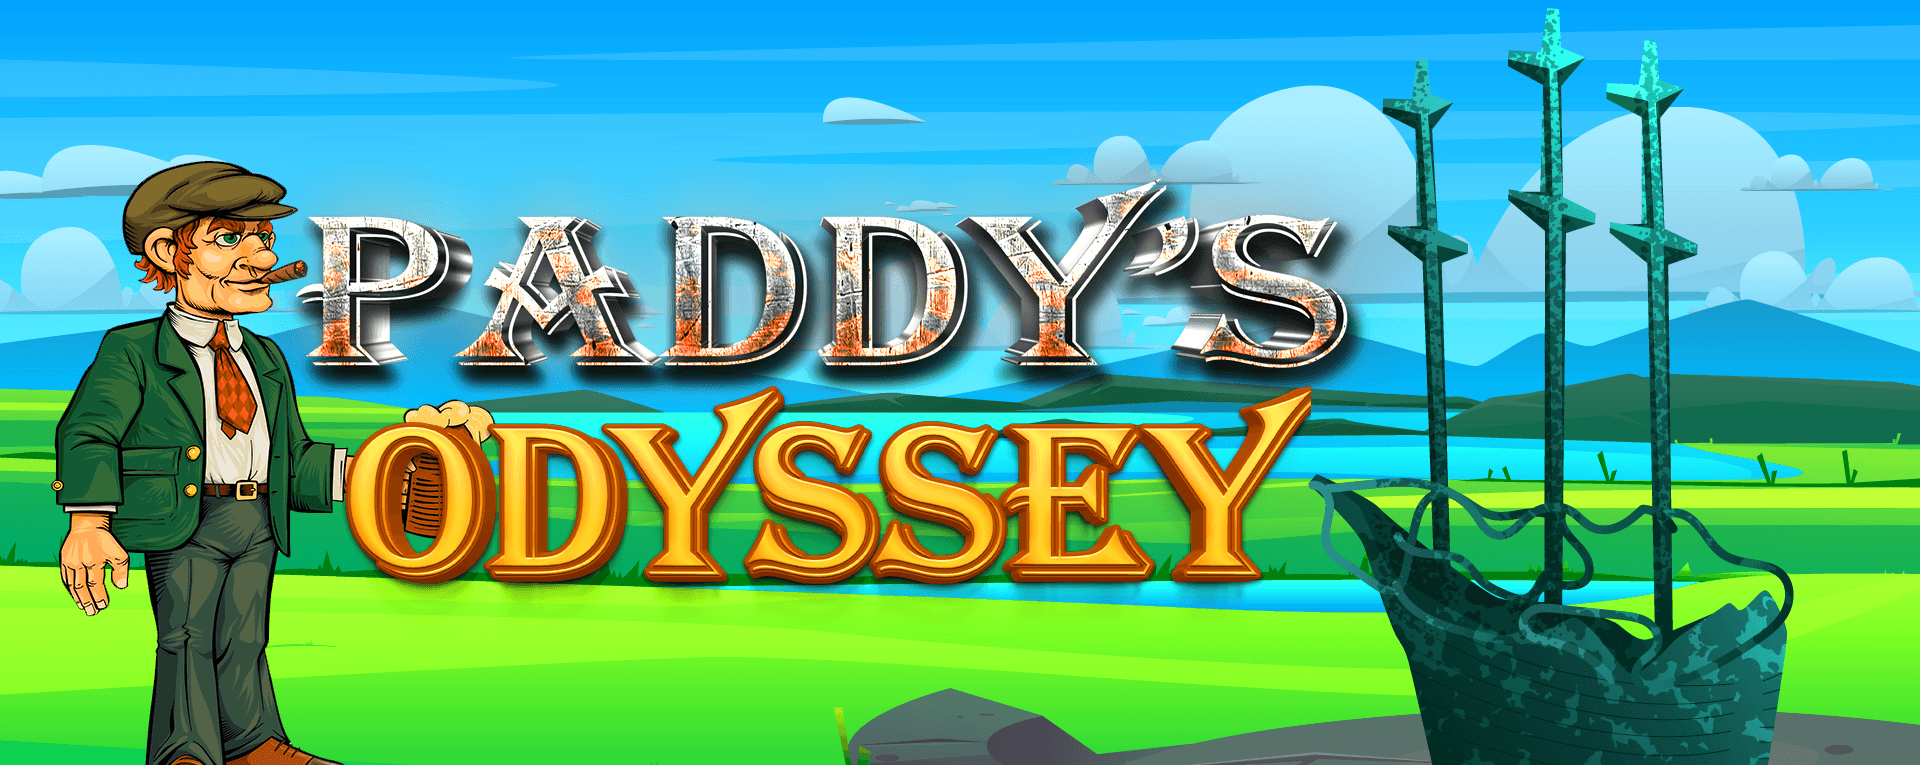 Paddys_Odyssey 横幅